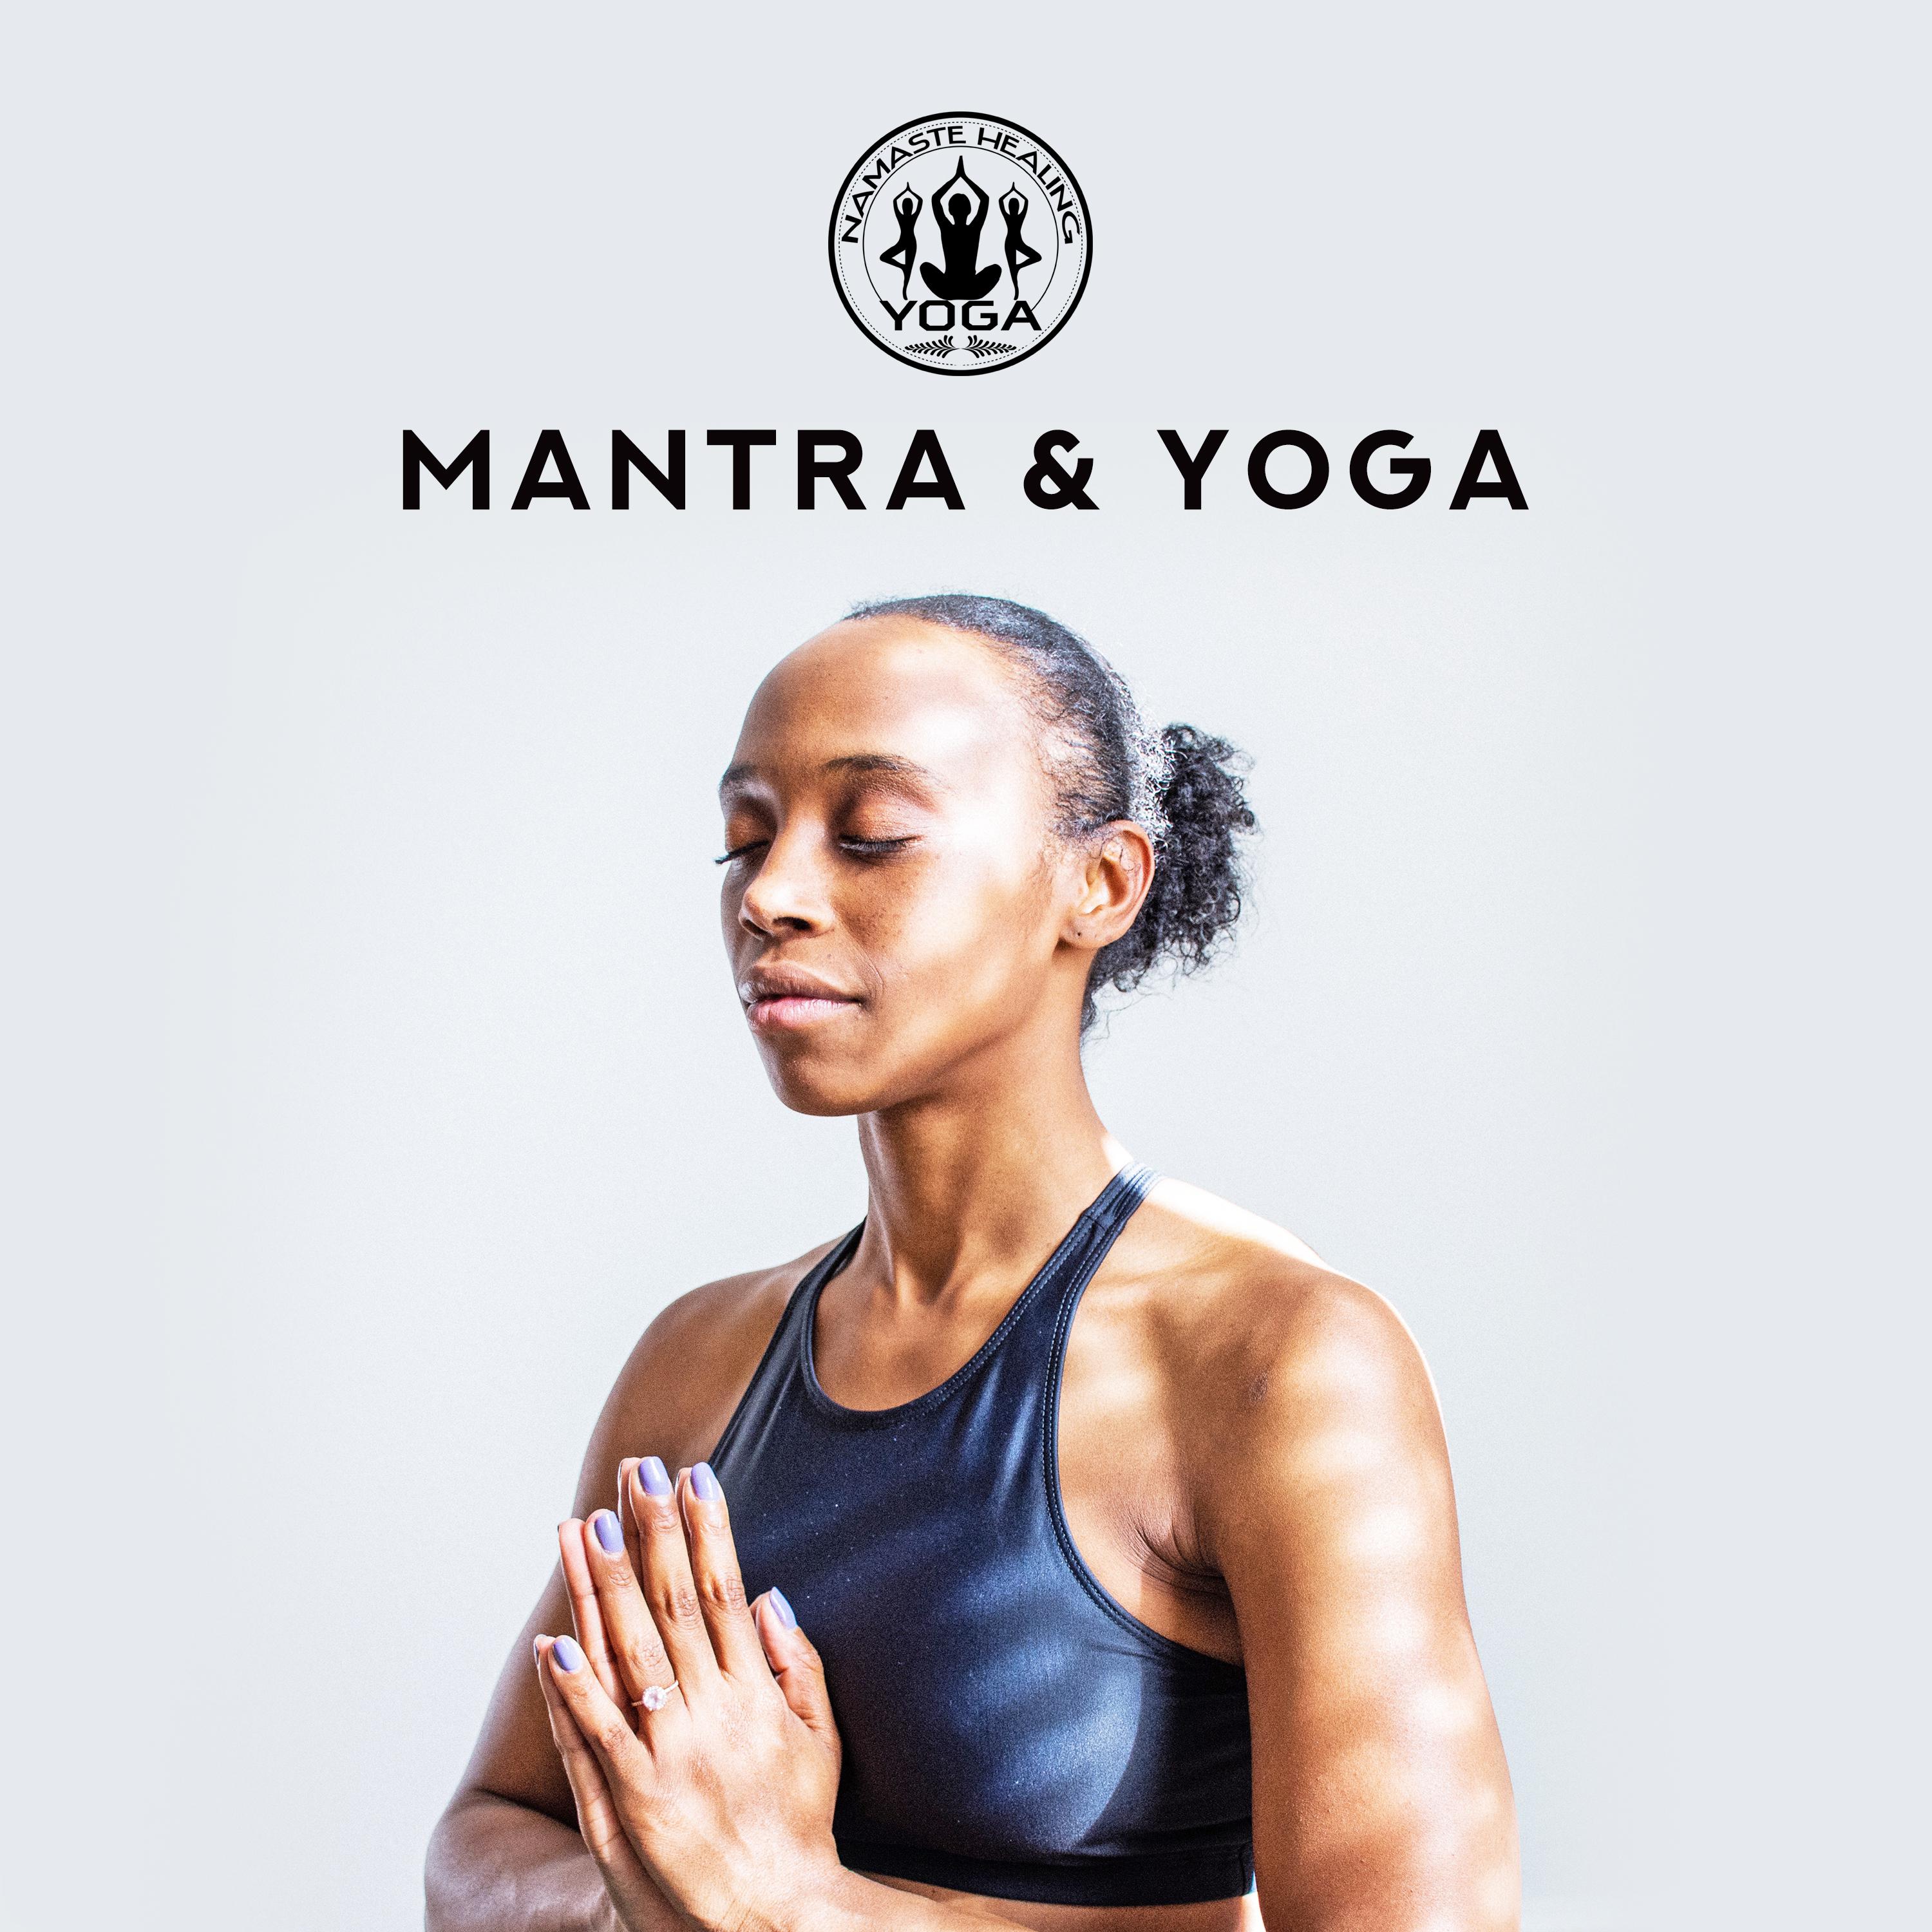 Mantra & Yoga